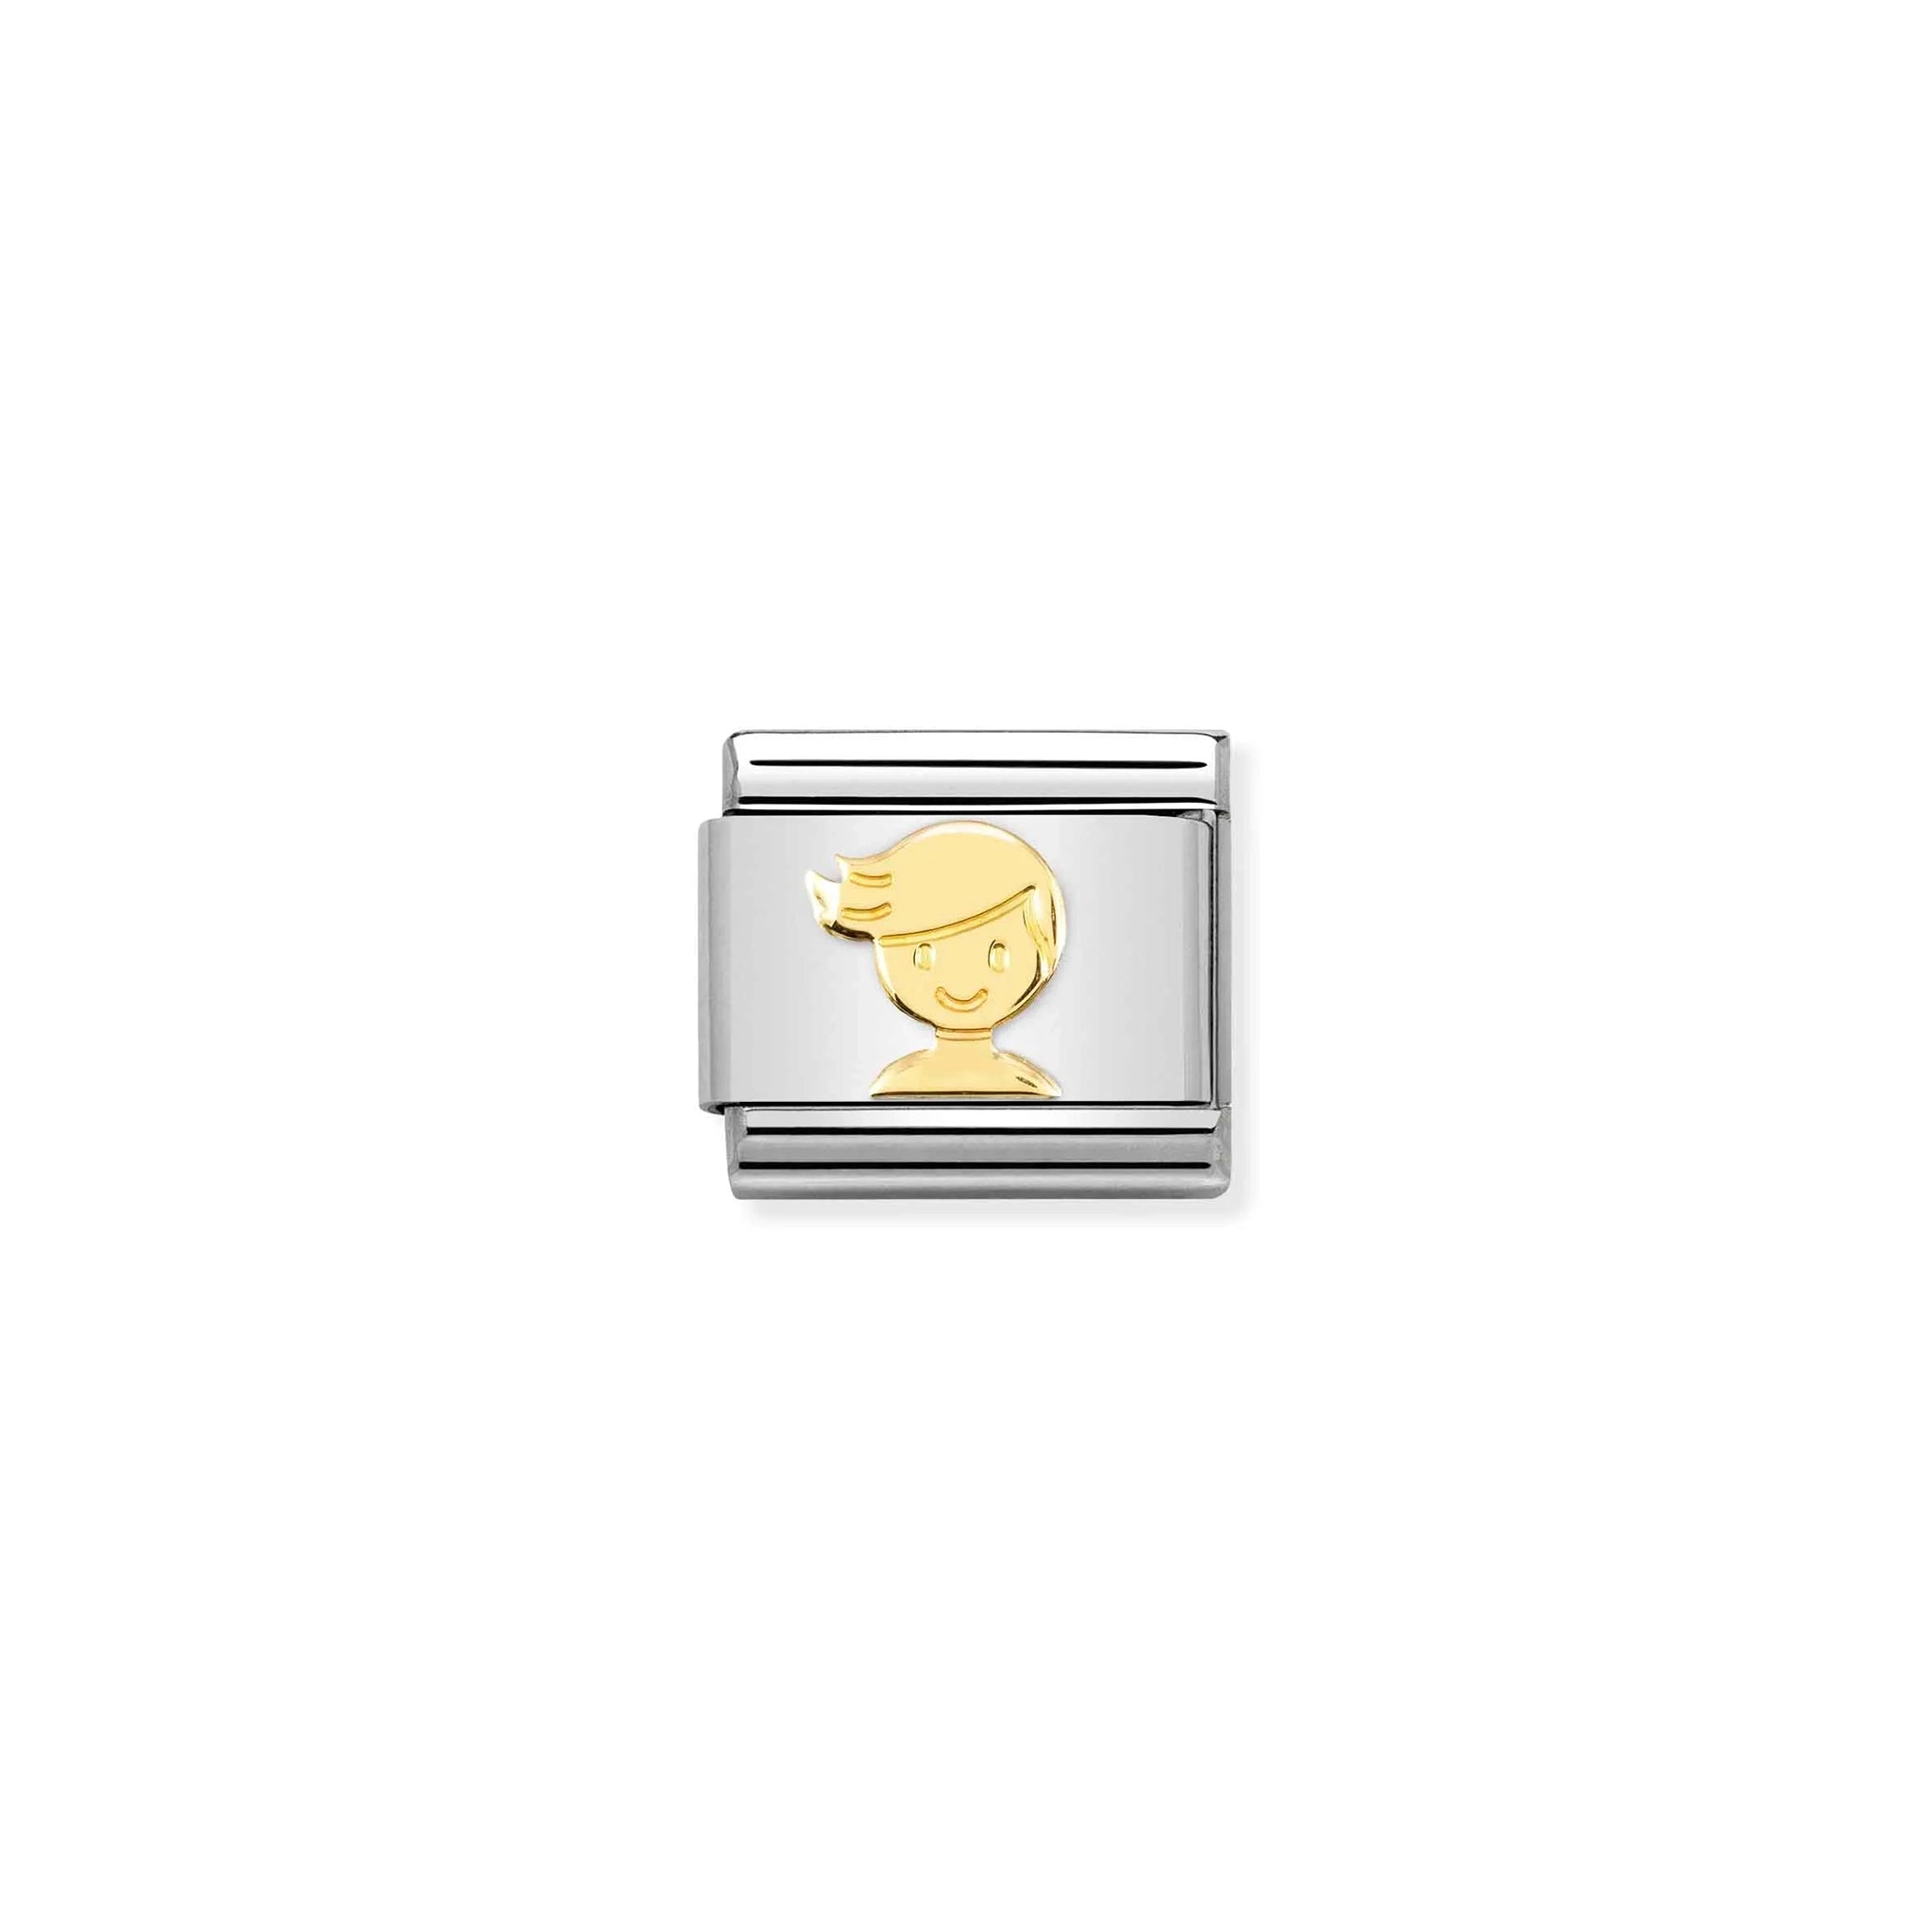 A Nomination charm link featuring a plain gold boy charm